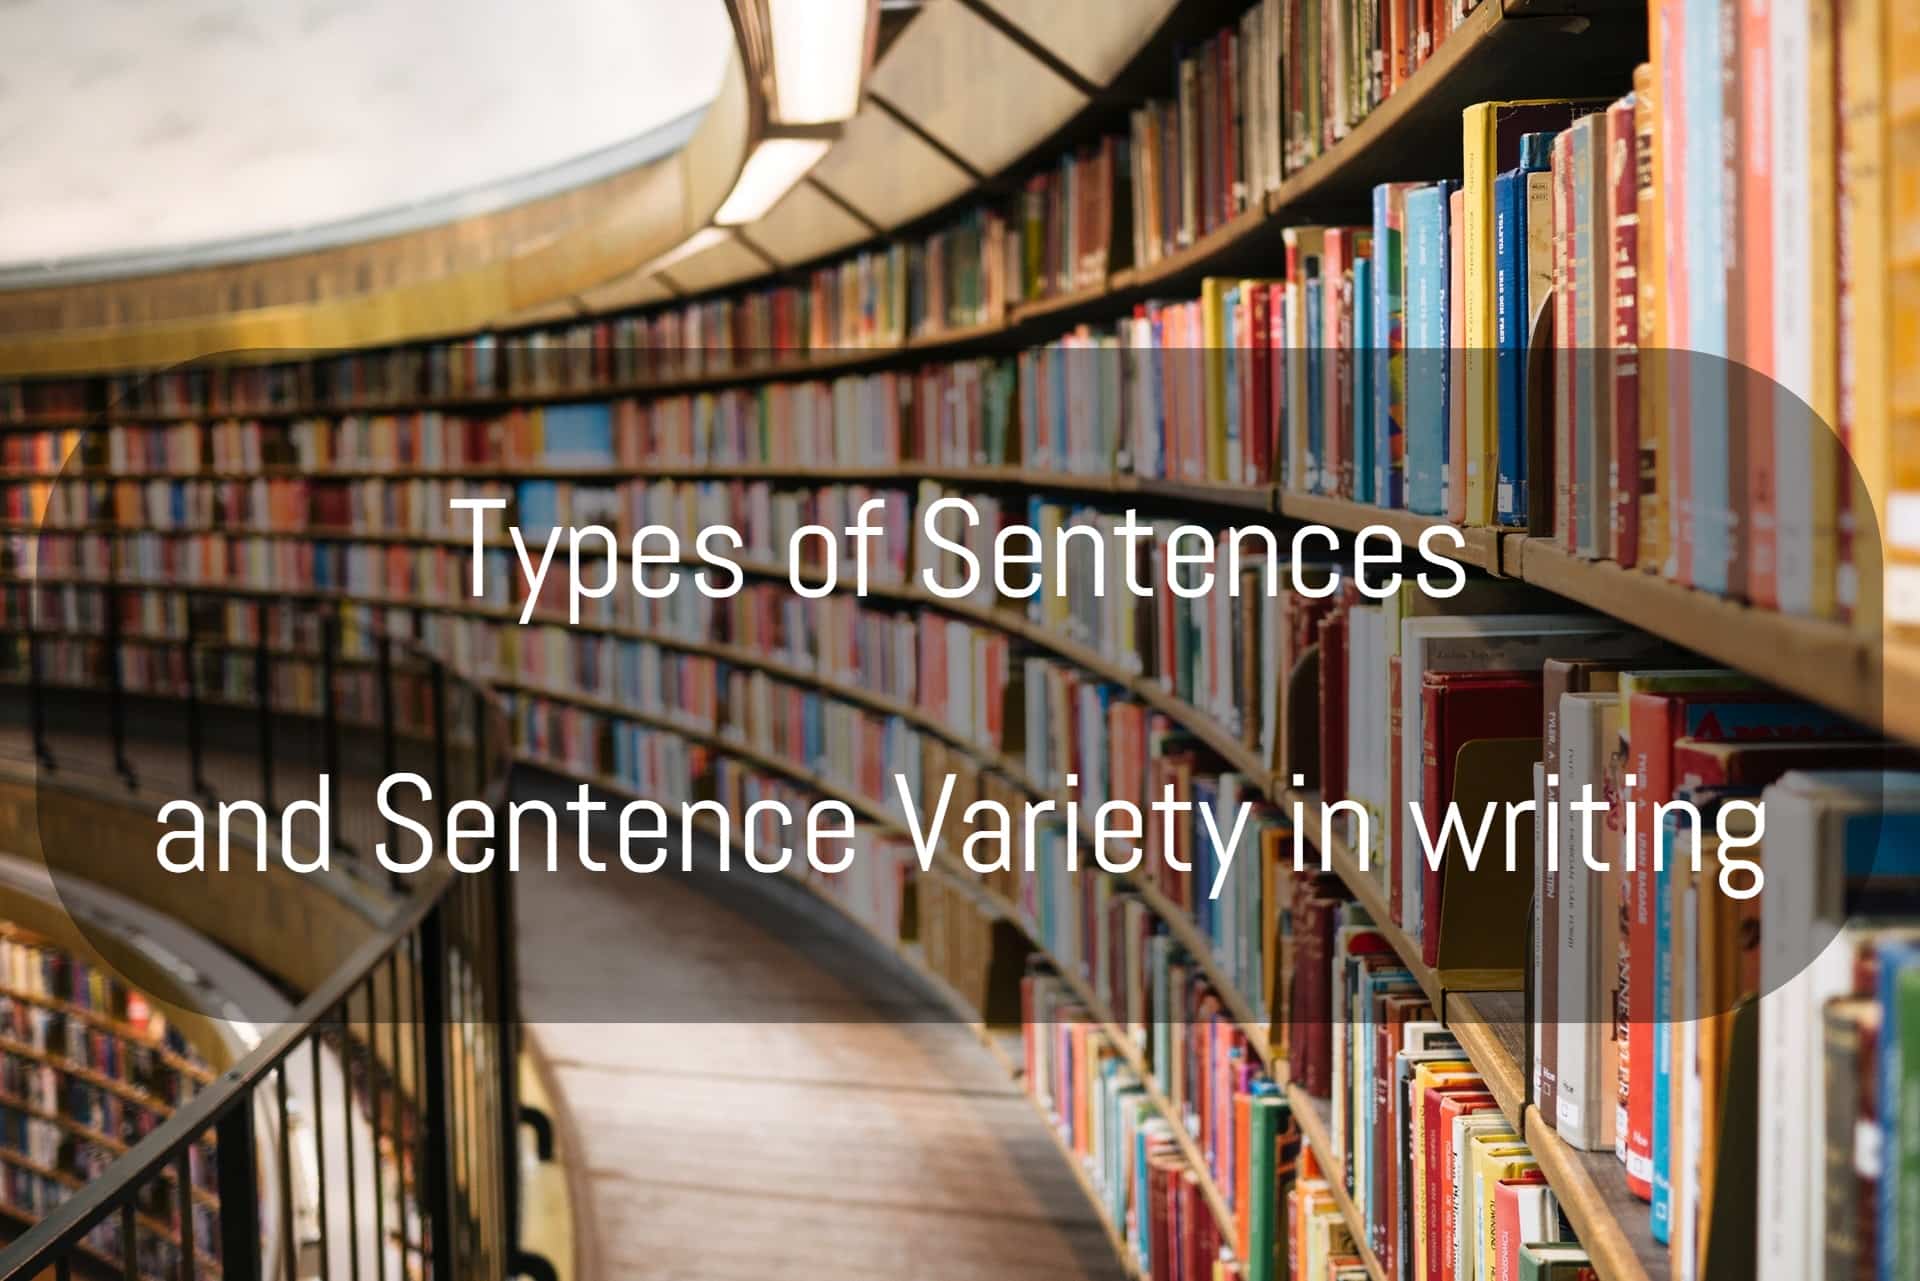 Types of sentences in English